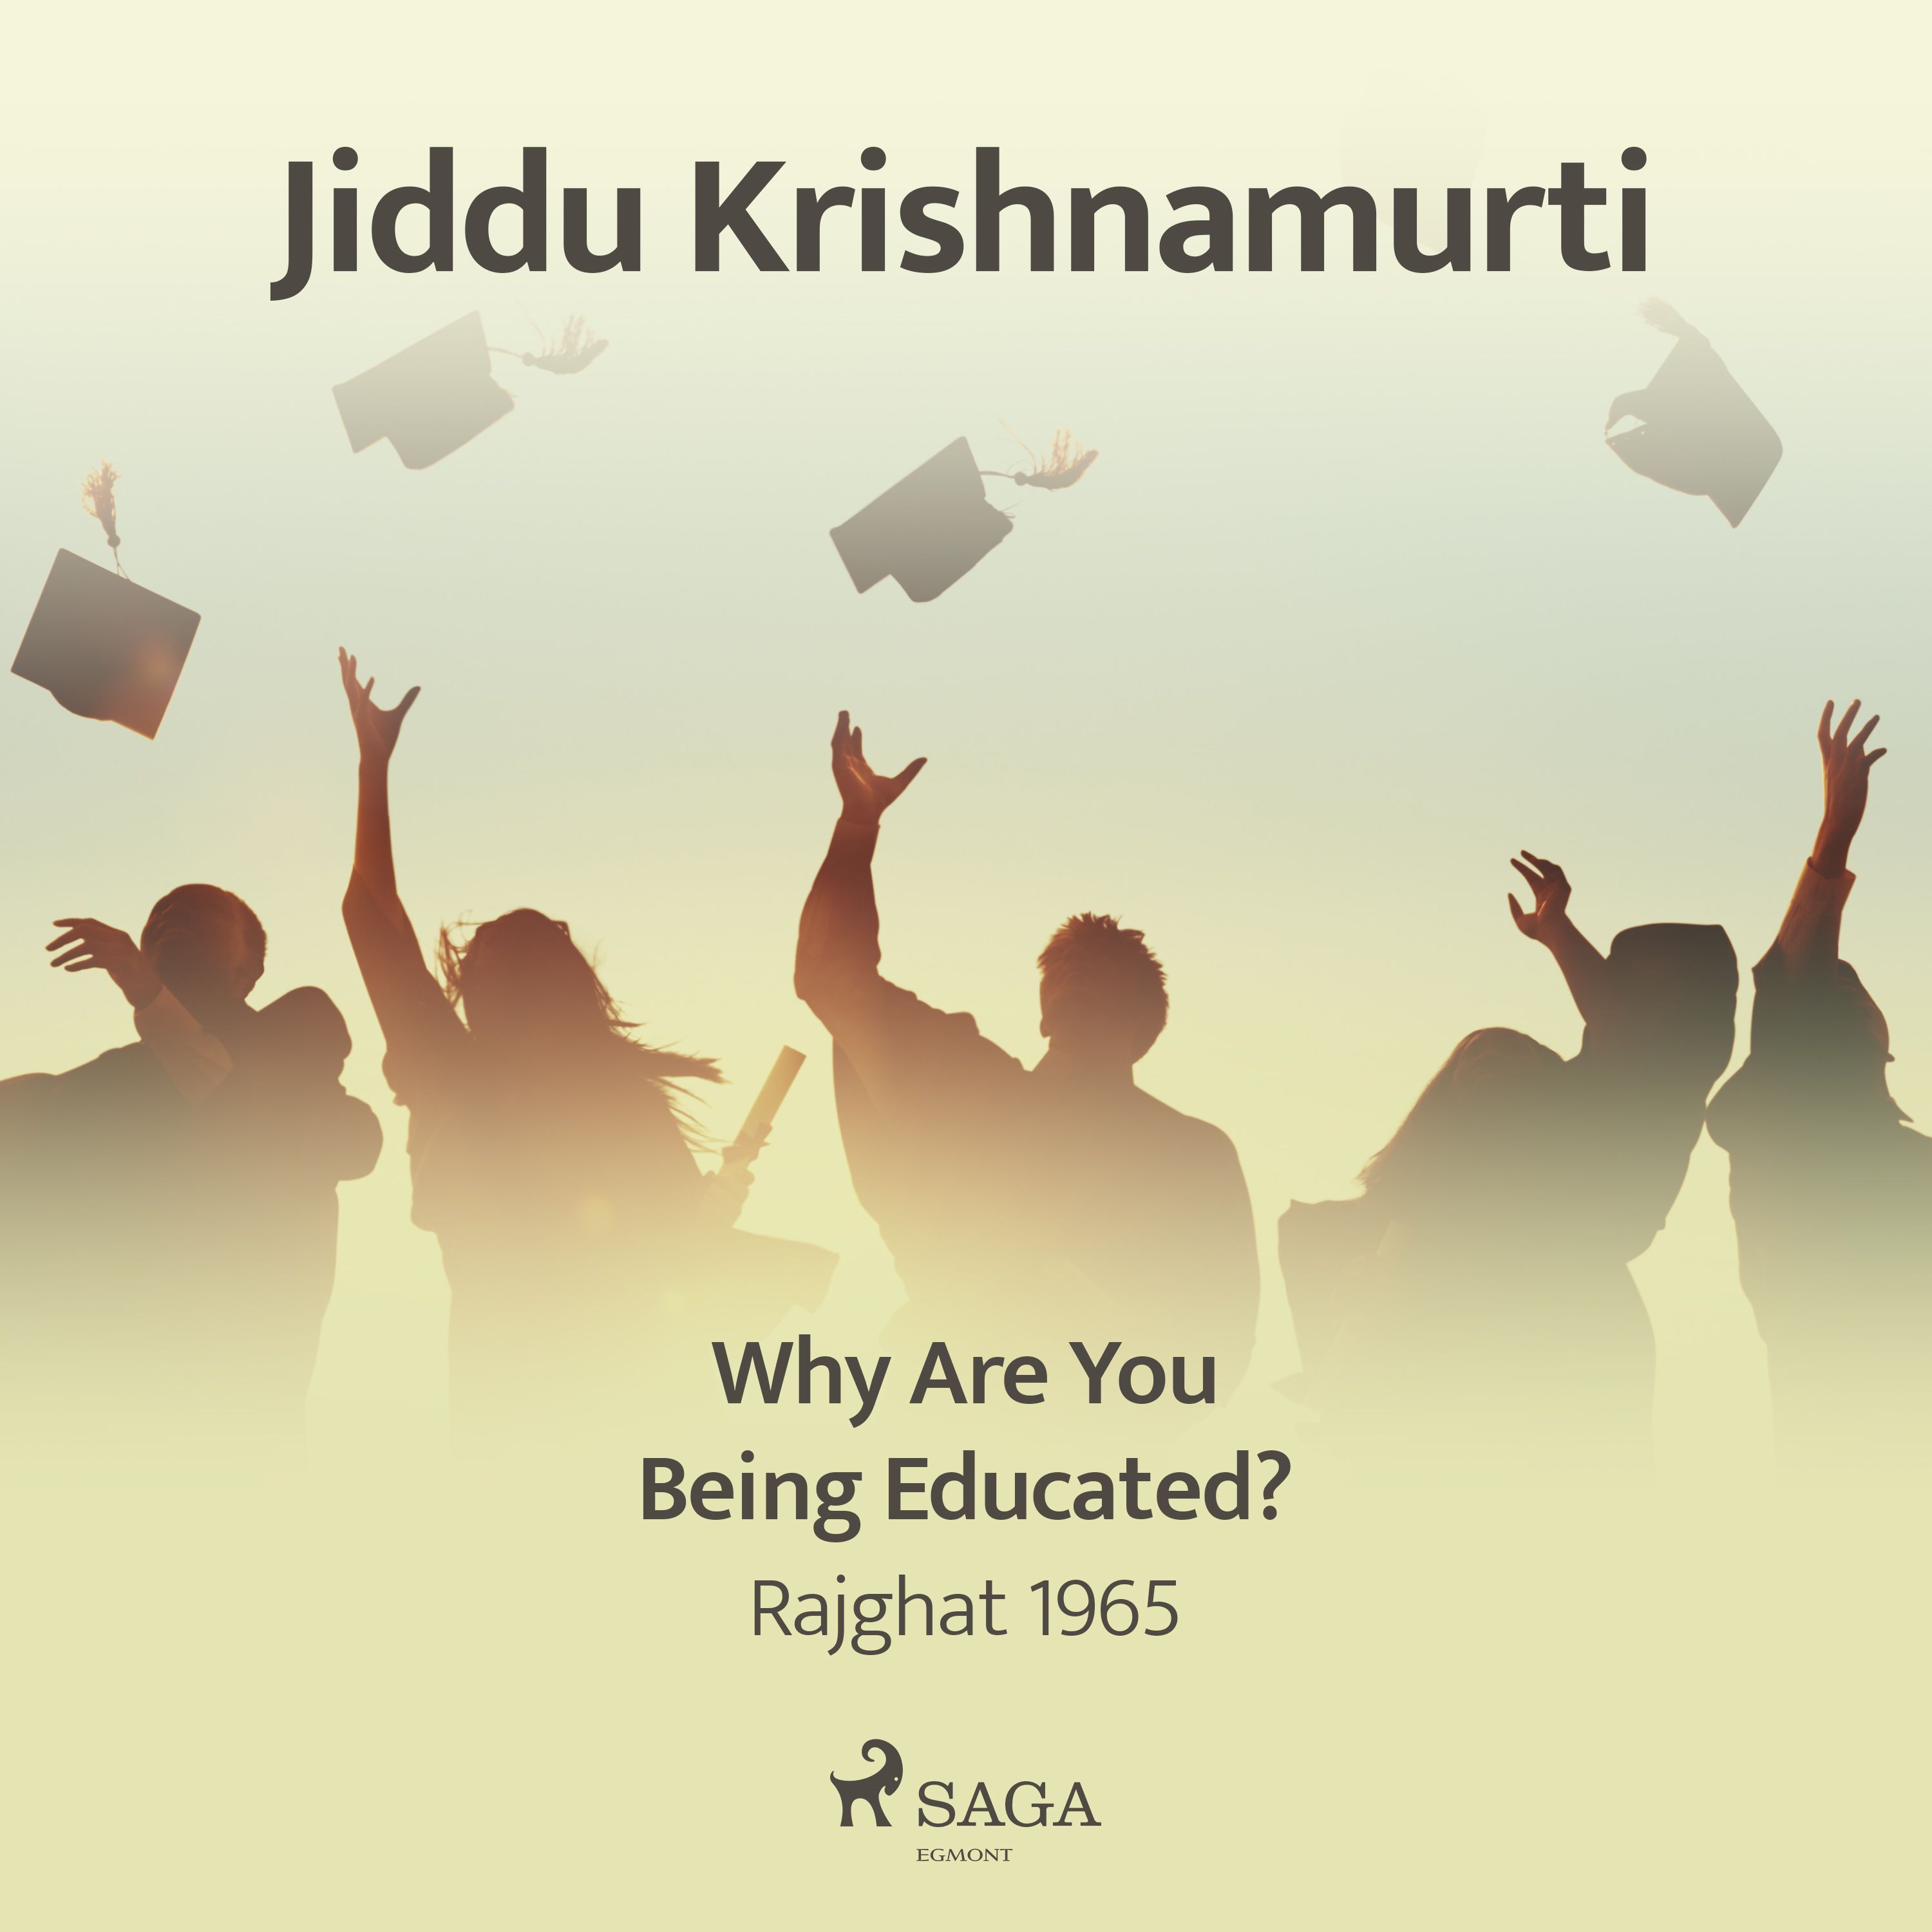 Why Are You Being Educated? – Rajghat 1965, lydbog af Jiddu Krishnamurti